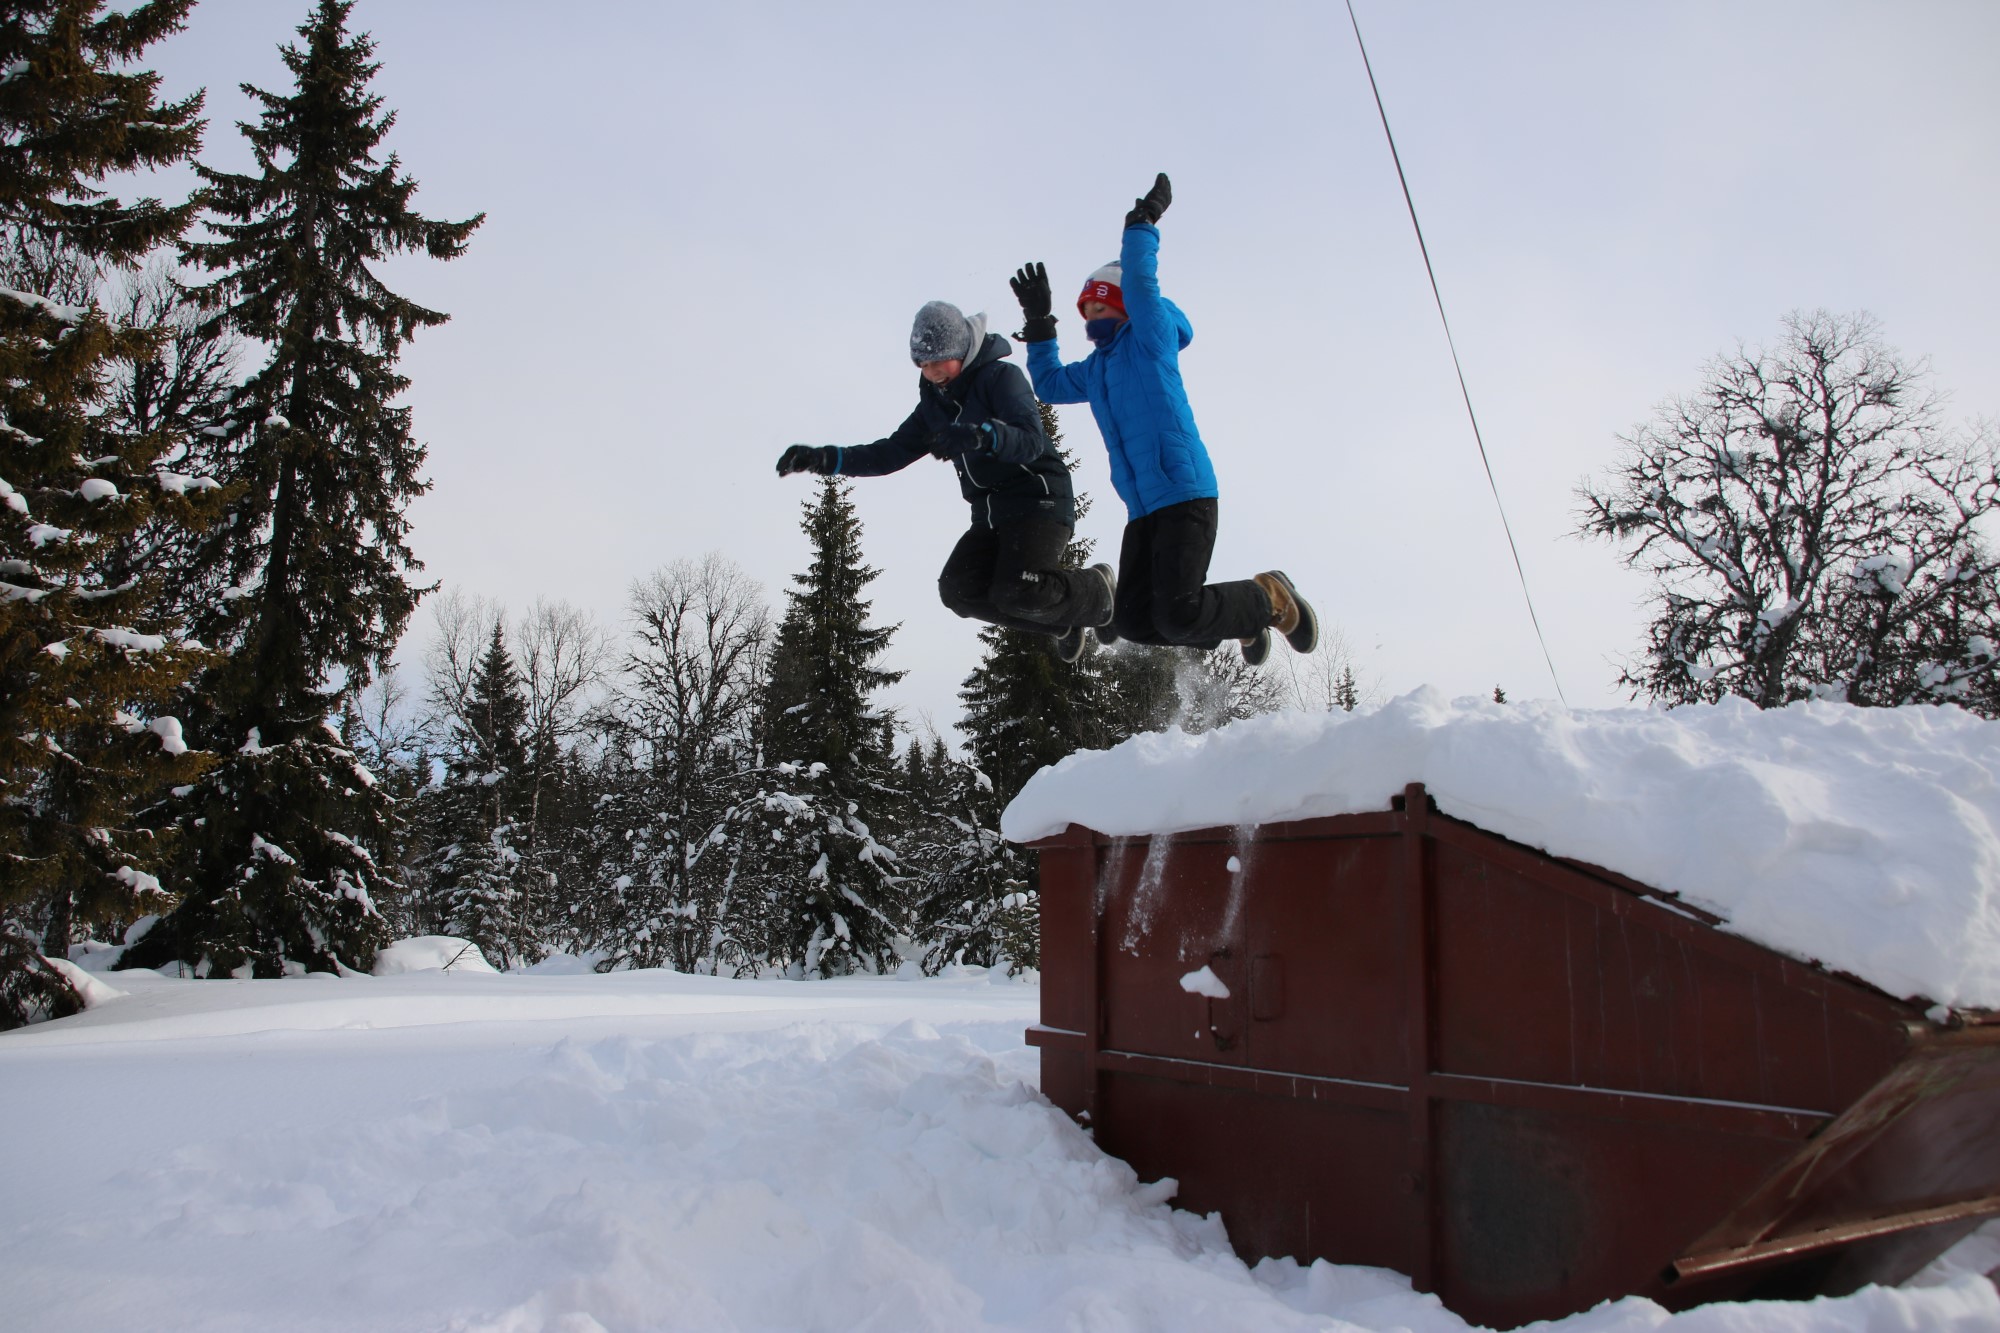 Hopping i snøen på Livoll